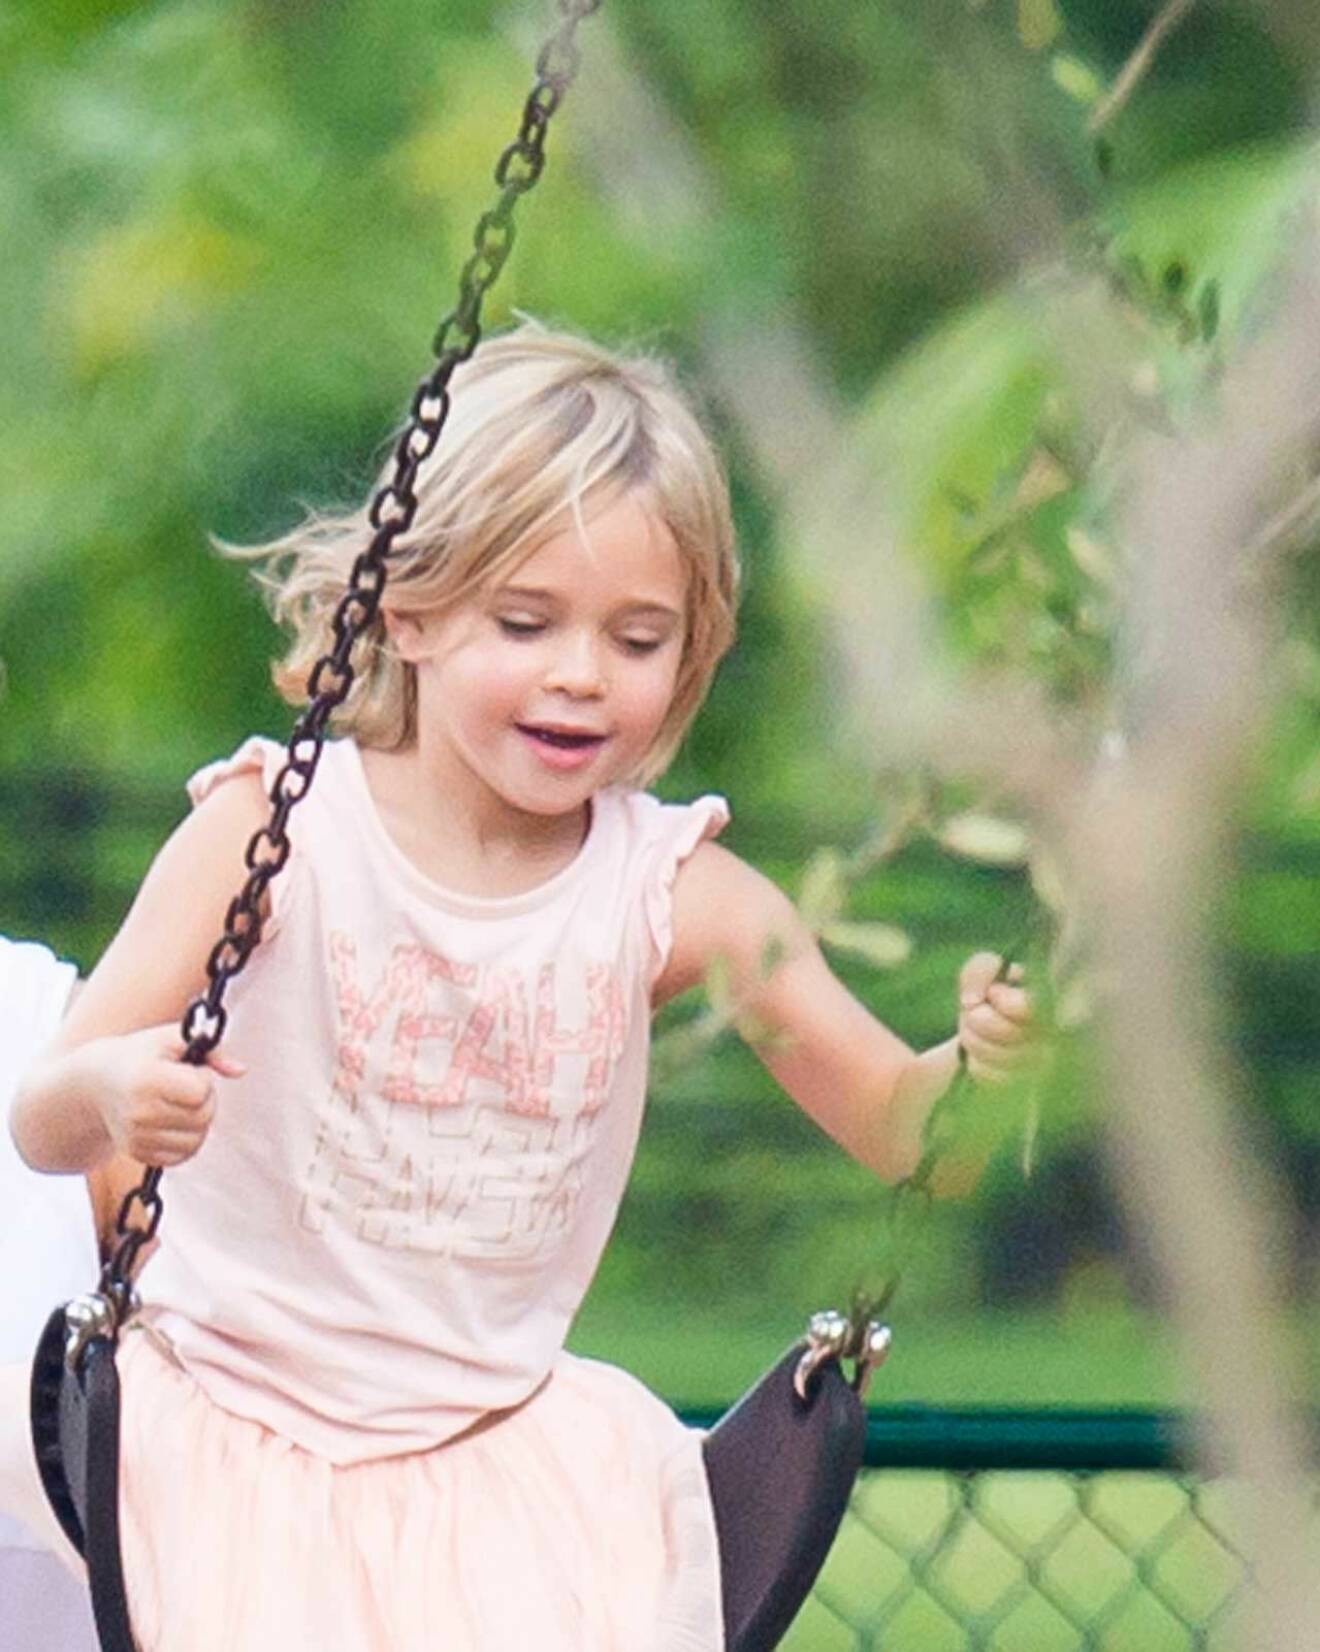 Prinsessan Leonore gungar i lekparken i Miami, Florida.